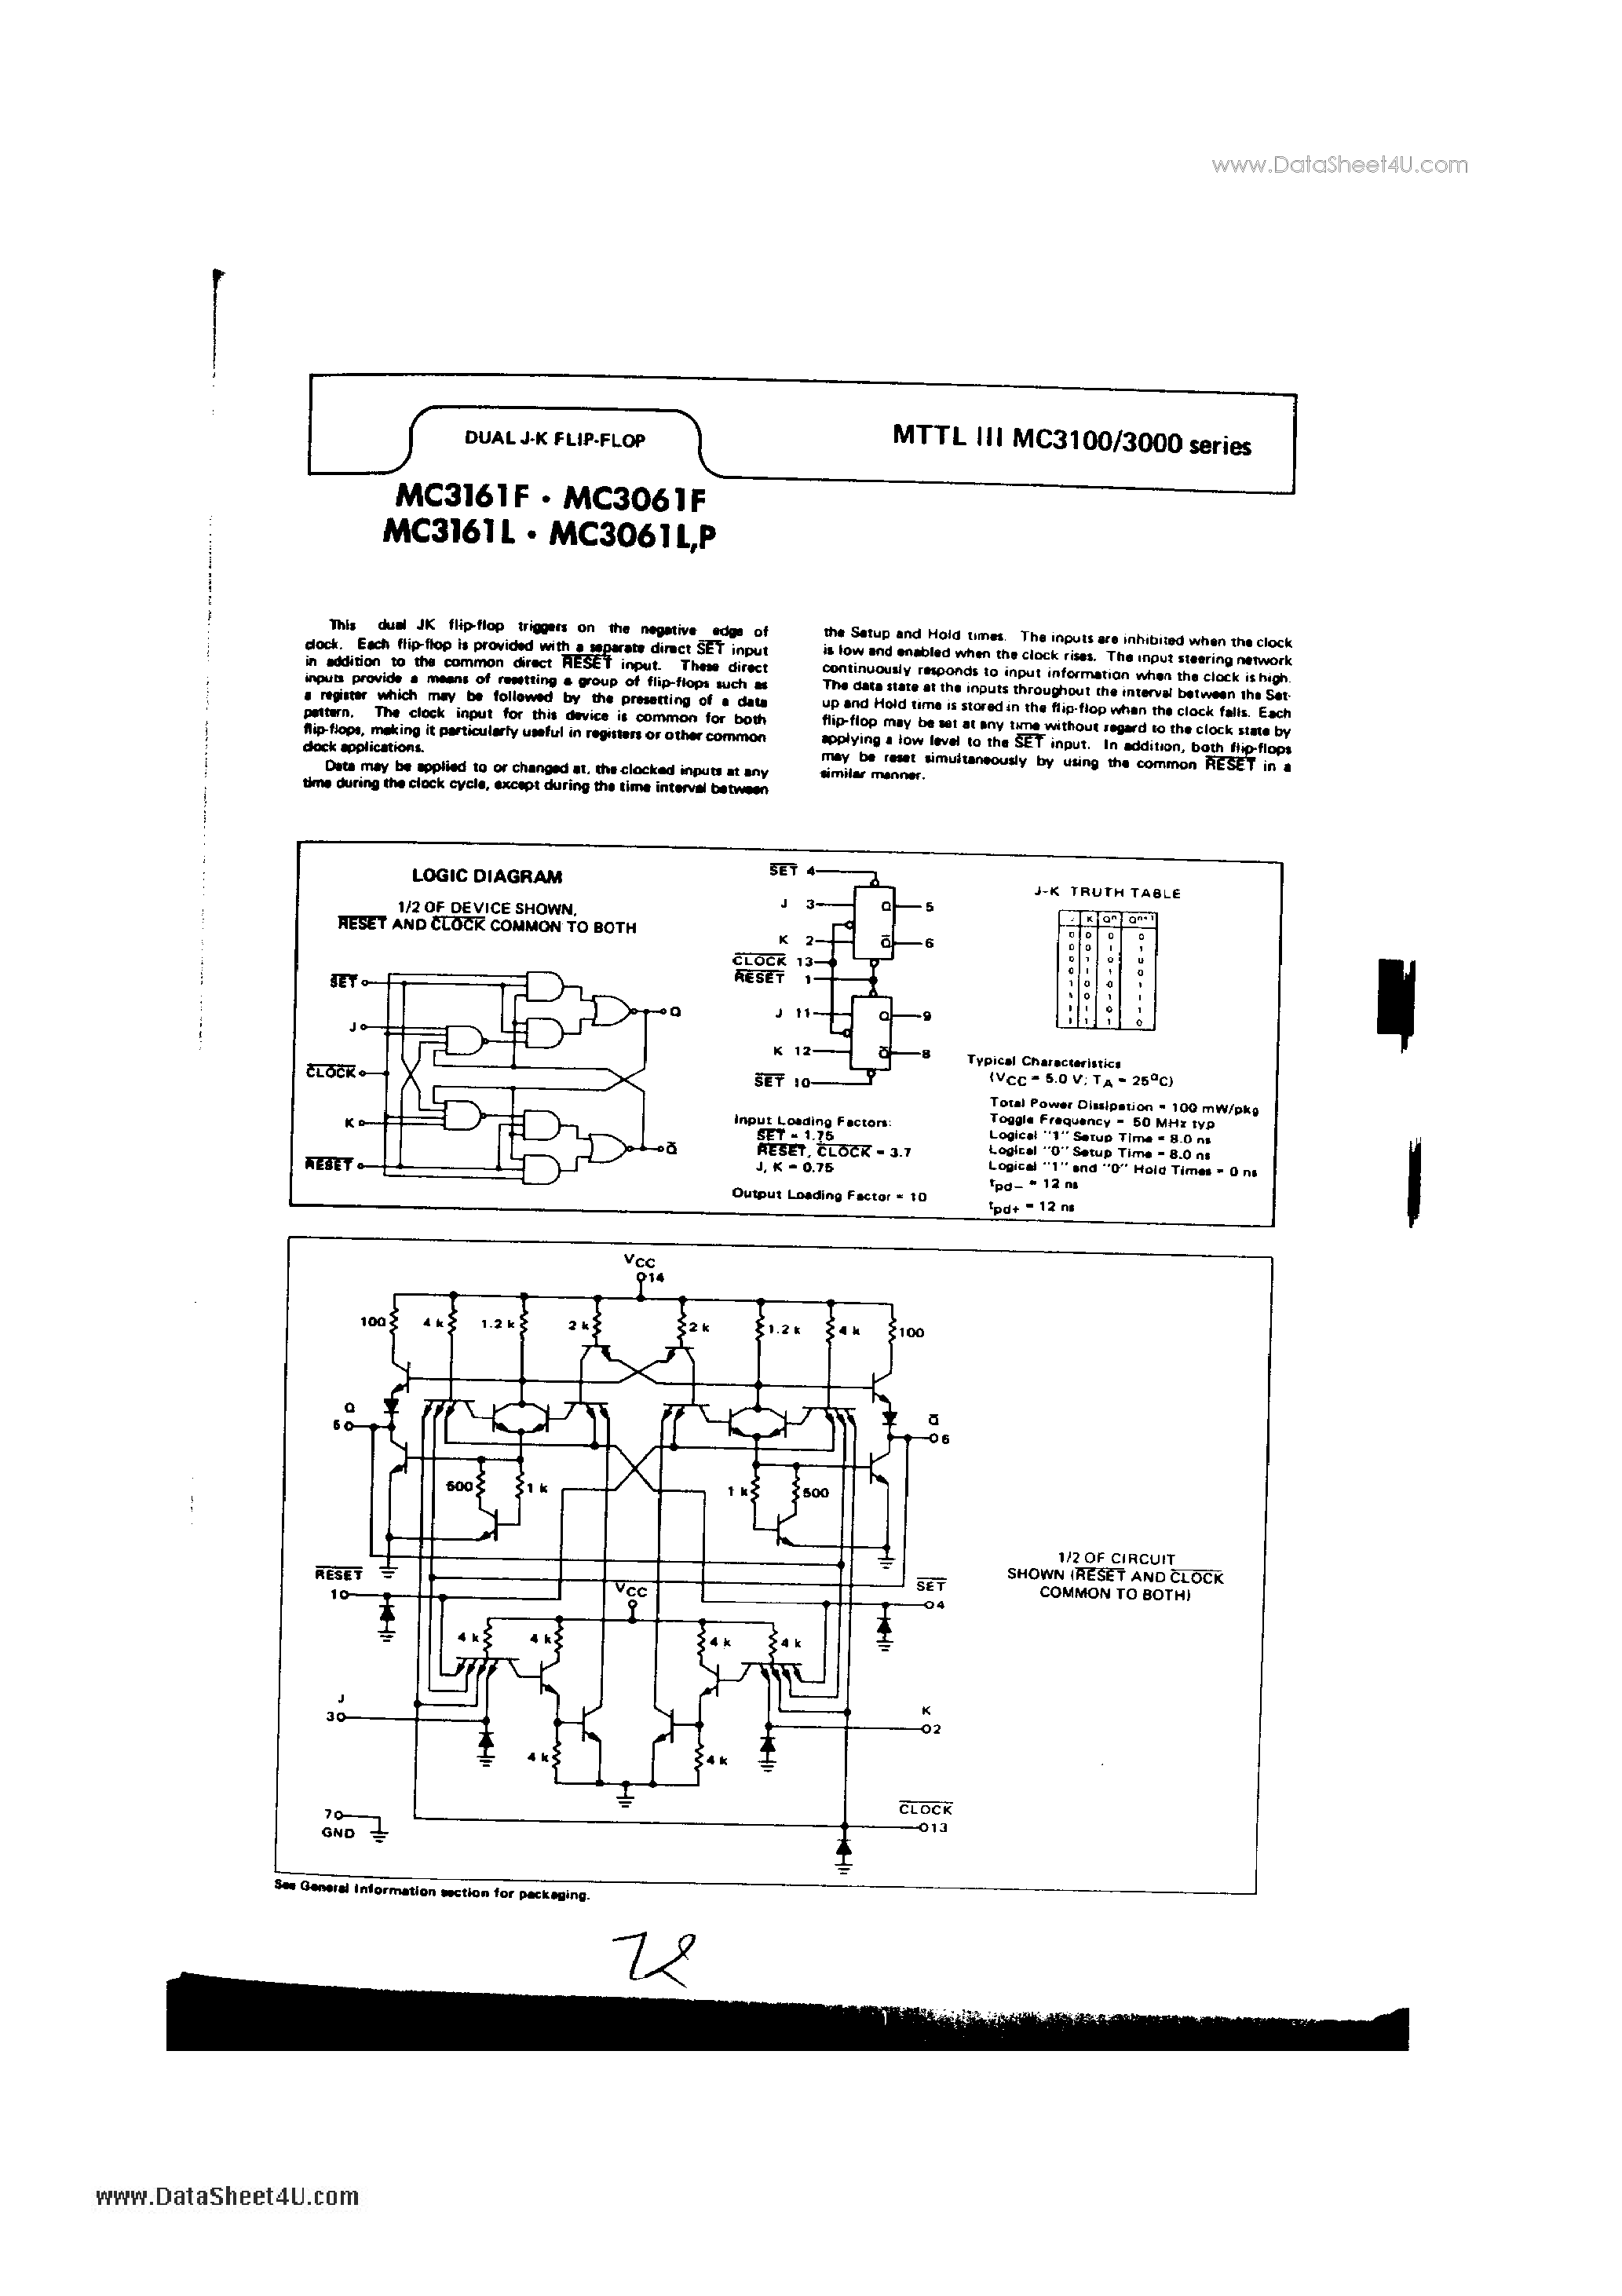 Datasheet MC3061F - Dual J-K Flip-Flop page 1